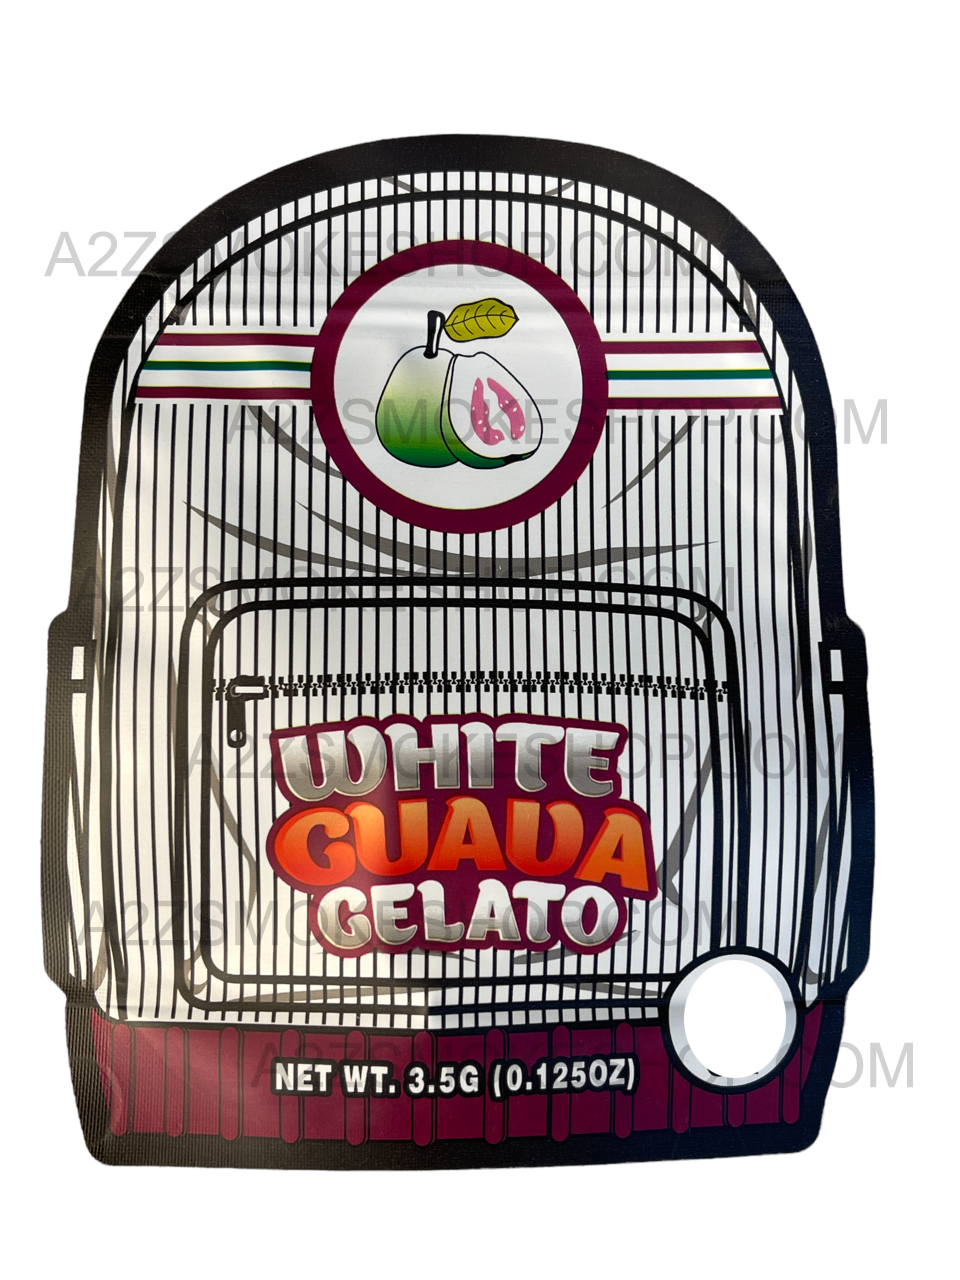 Backpack Boyz White Guava Gelato cut out Mylar zip lock bag 3.5G